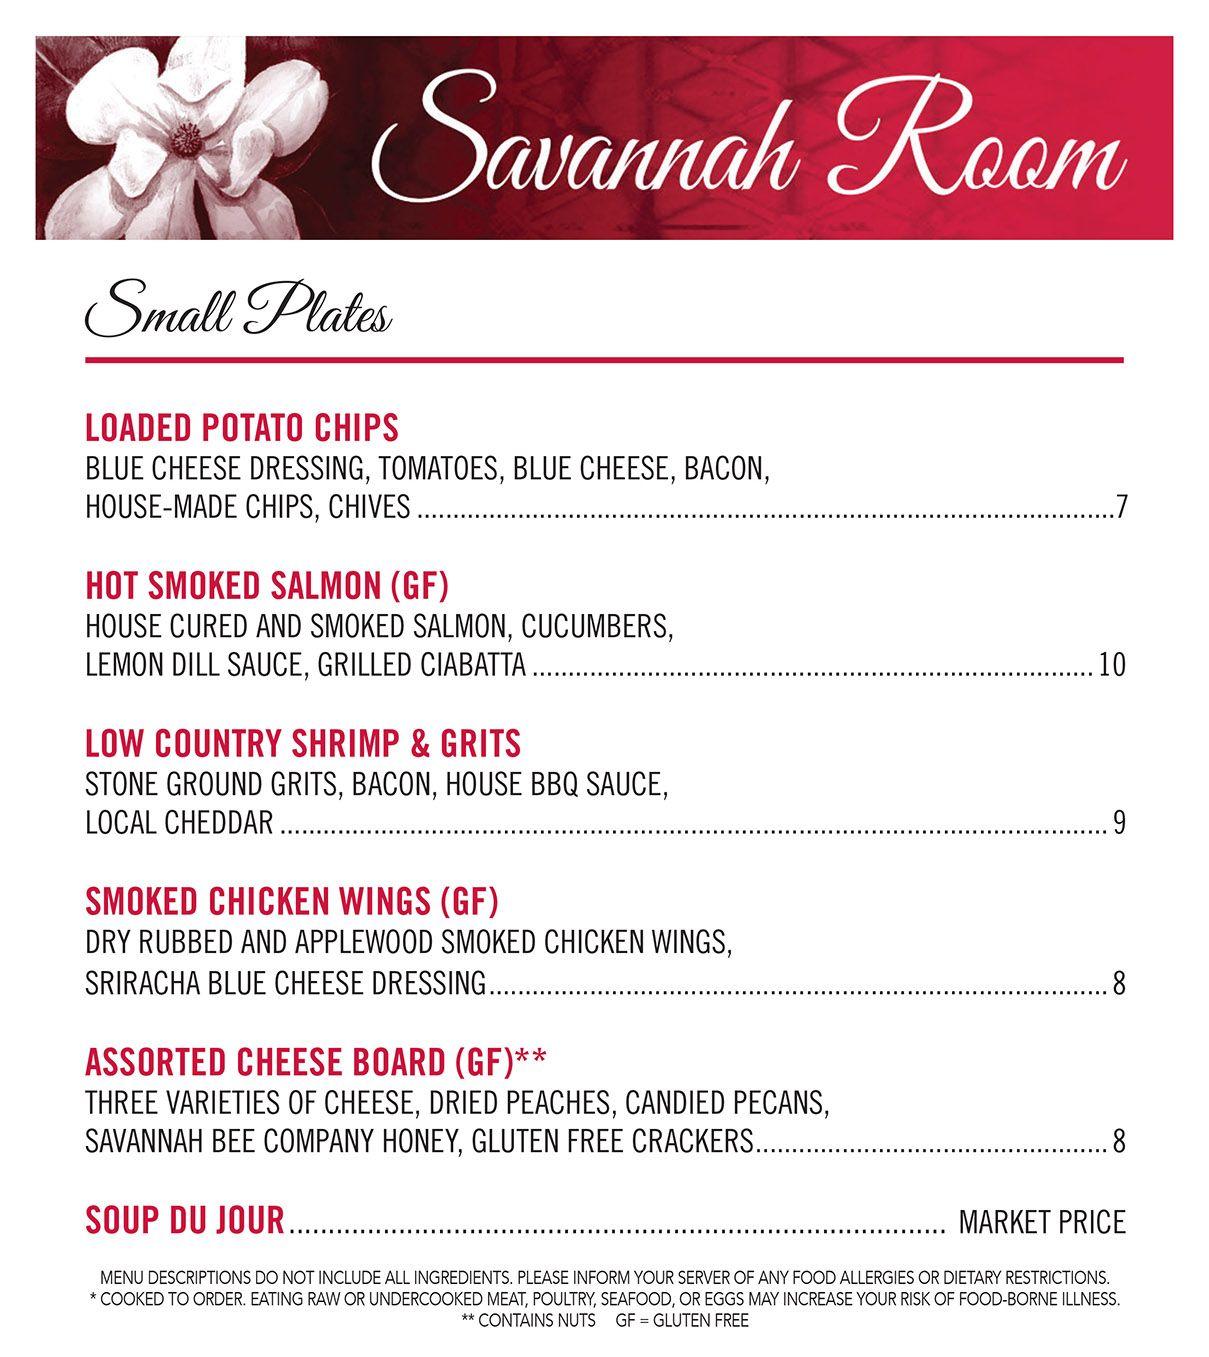 Terrell Red and Yellow Restaurant Logo - The Savannah Room at The UGA Hotel | Athens, GA Restaurants